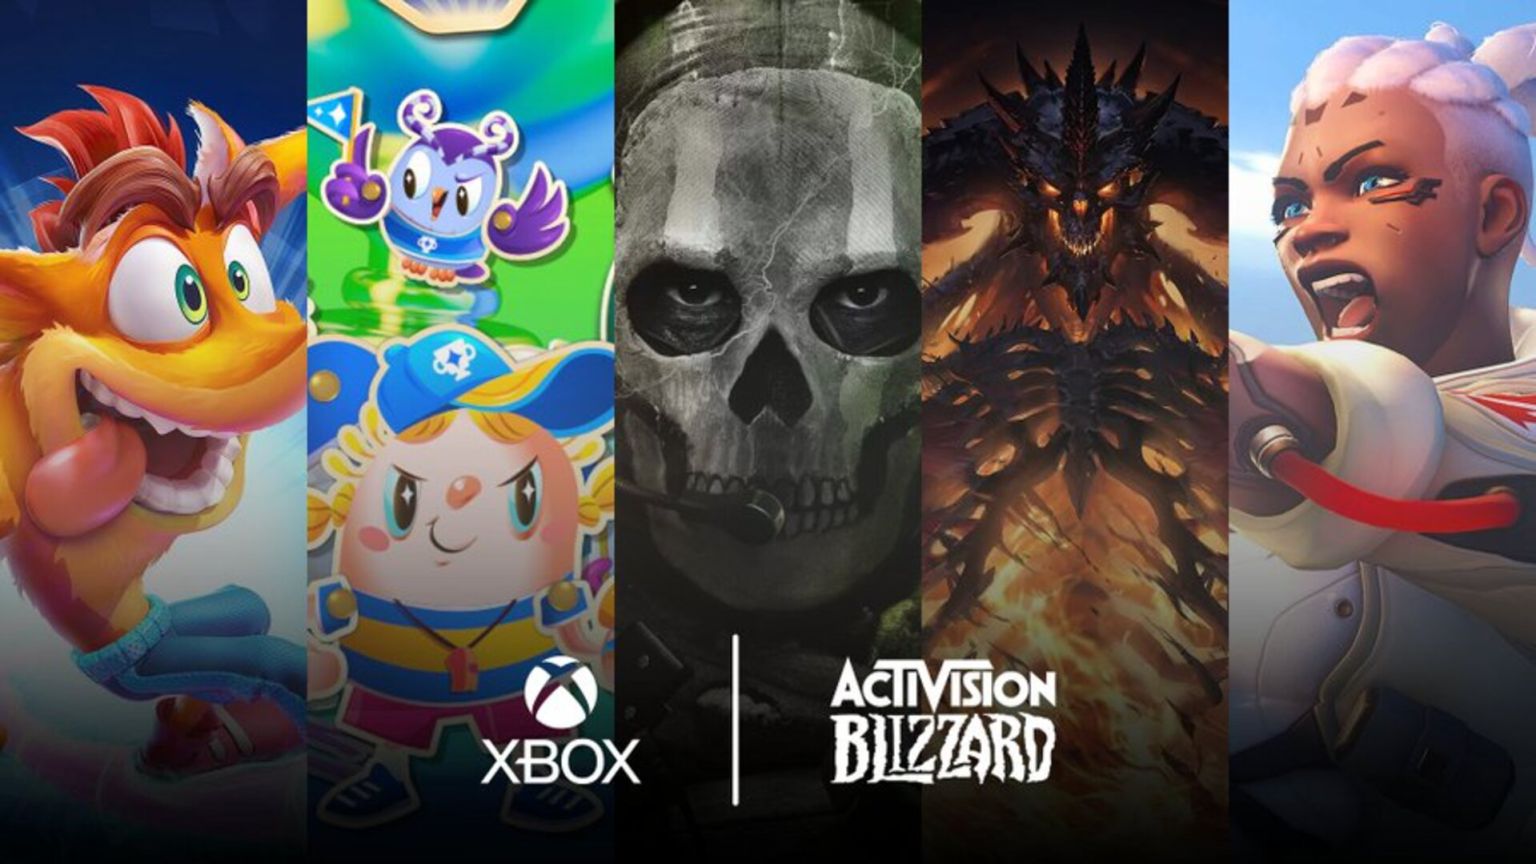 Activision Blizzard - Microsoft